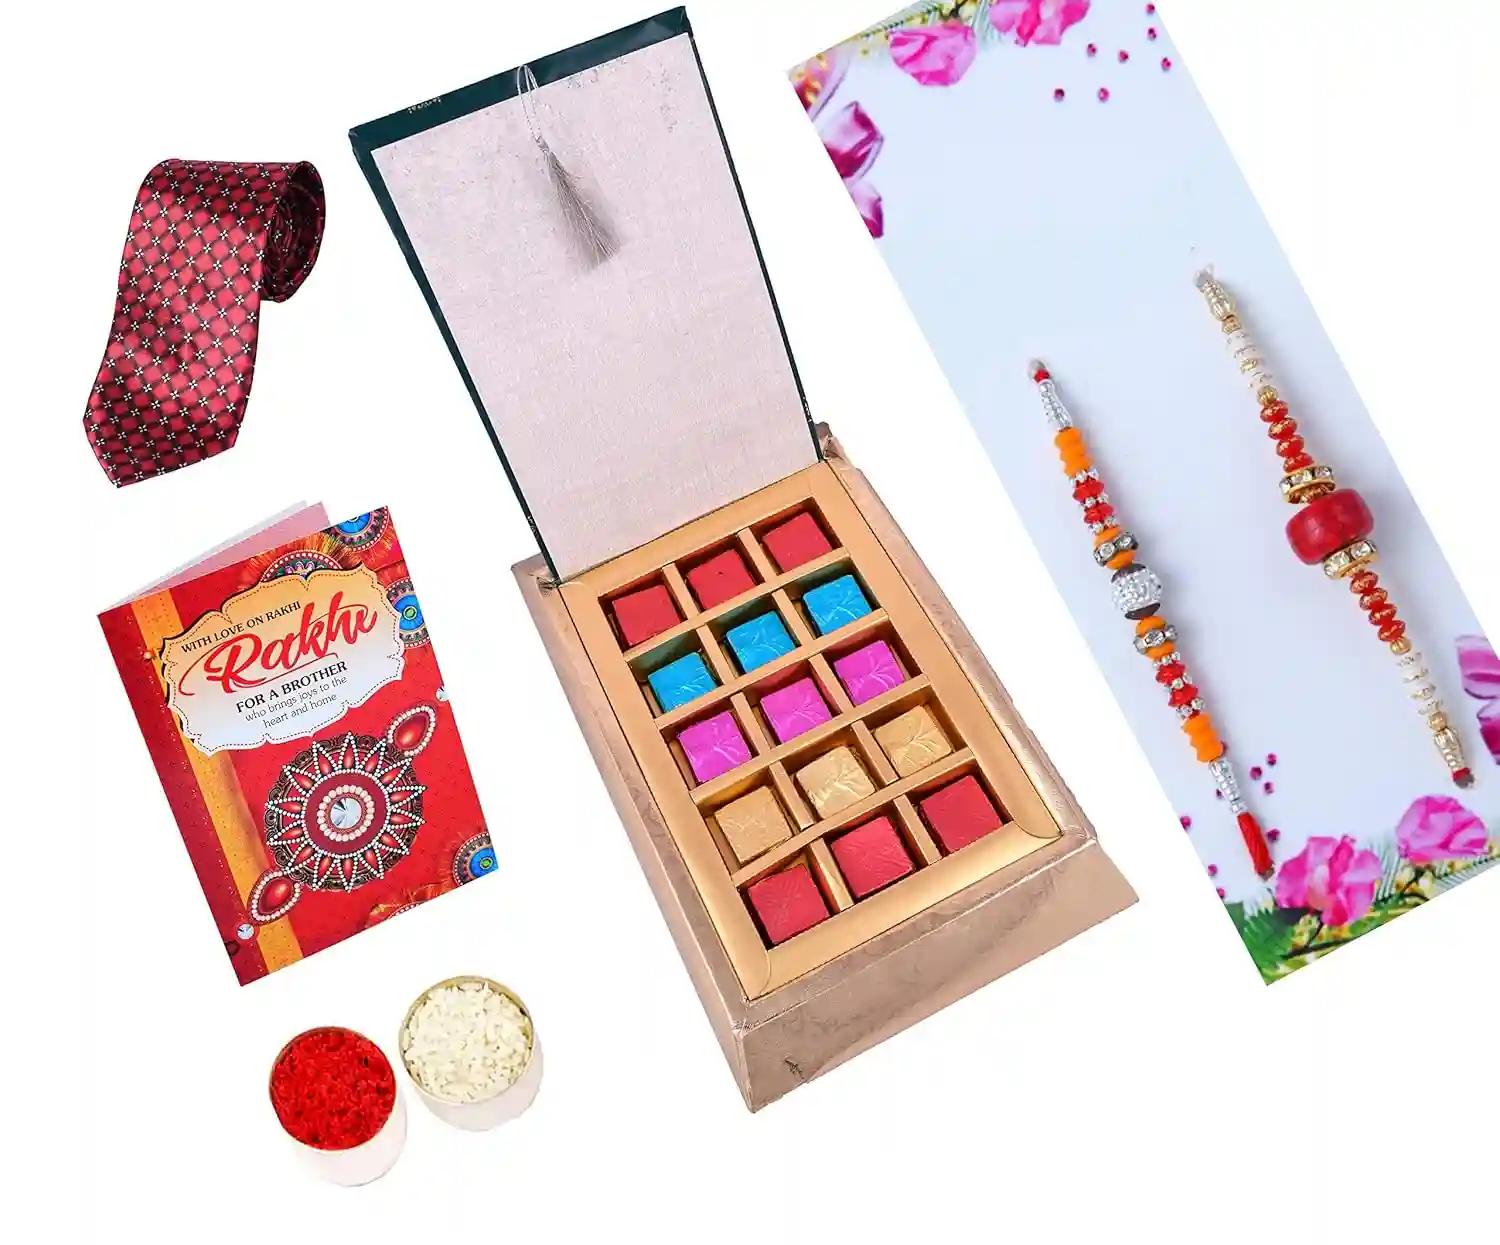 MANTOUSS Rakhi For Brother With Gift/Rakhi For Brother With Chocolate-Set Of Two Rakhi+Chocolate Box+Roli,Chawal+Rakhi Greeting Card+Men'S Neck Tie